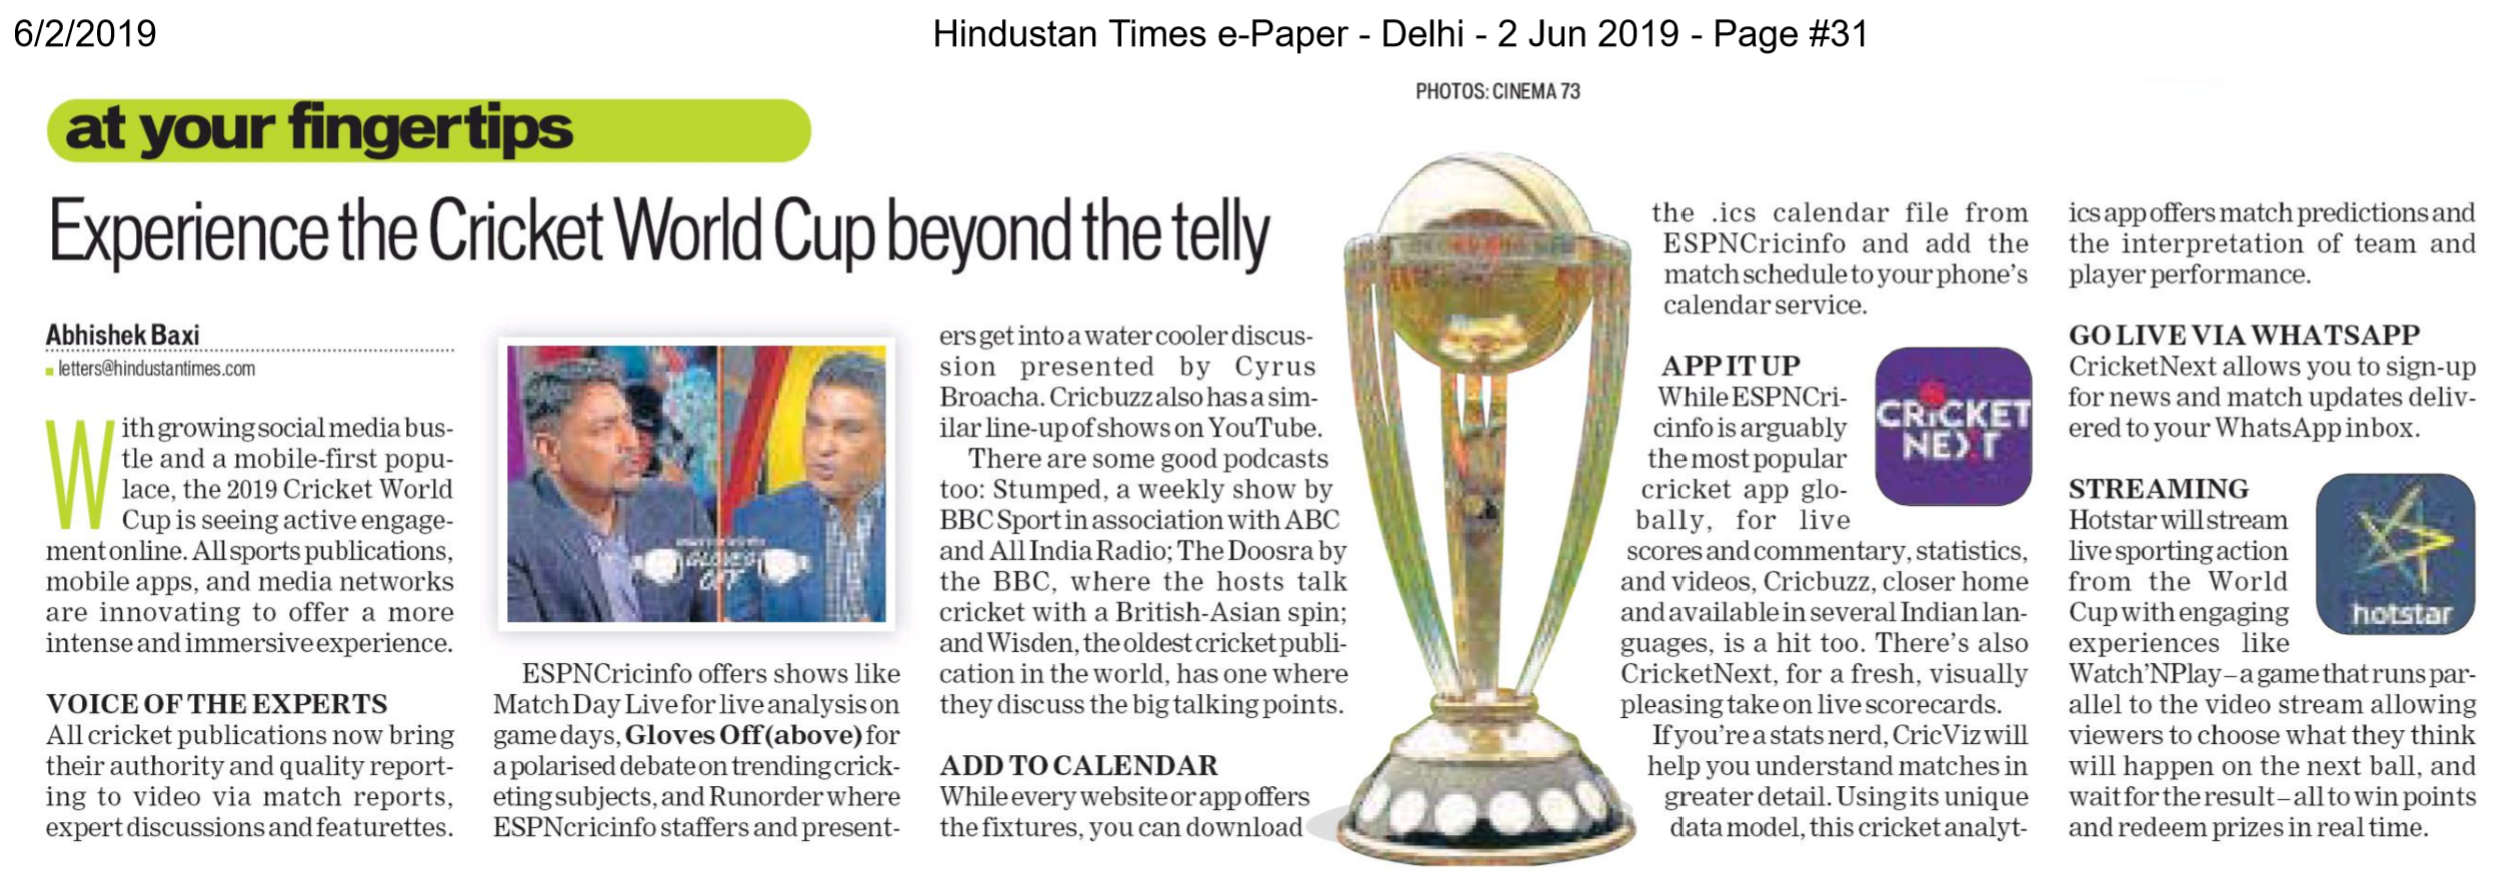 Kicking off my new column in Hindustan Times